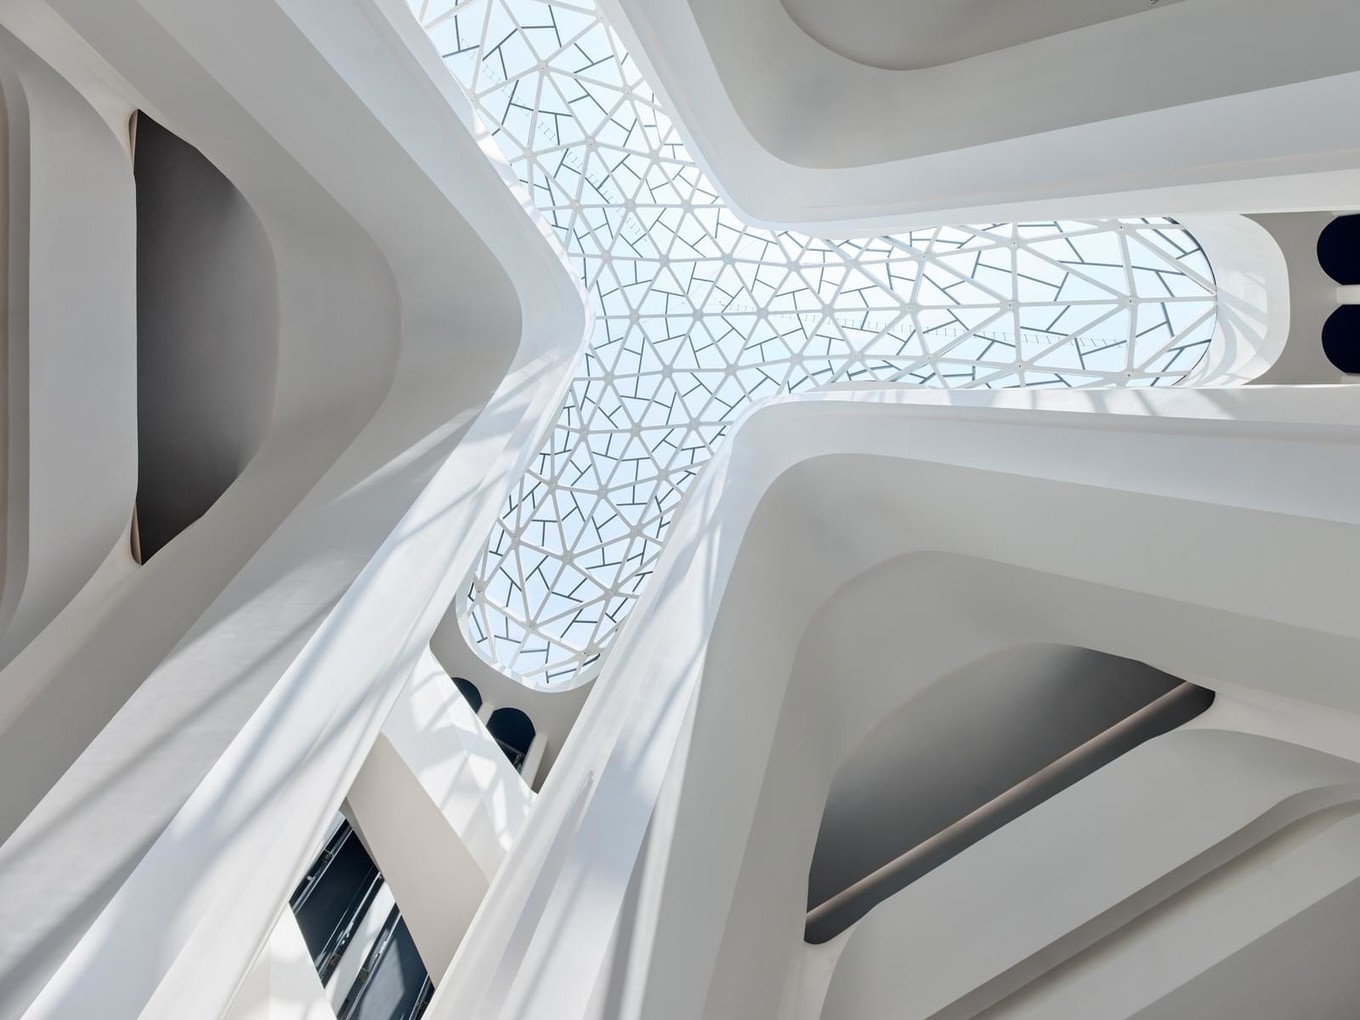 Центр культуры и искусств от Zaha Hadid Architects в Китае